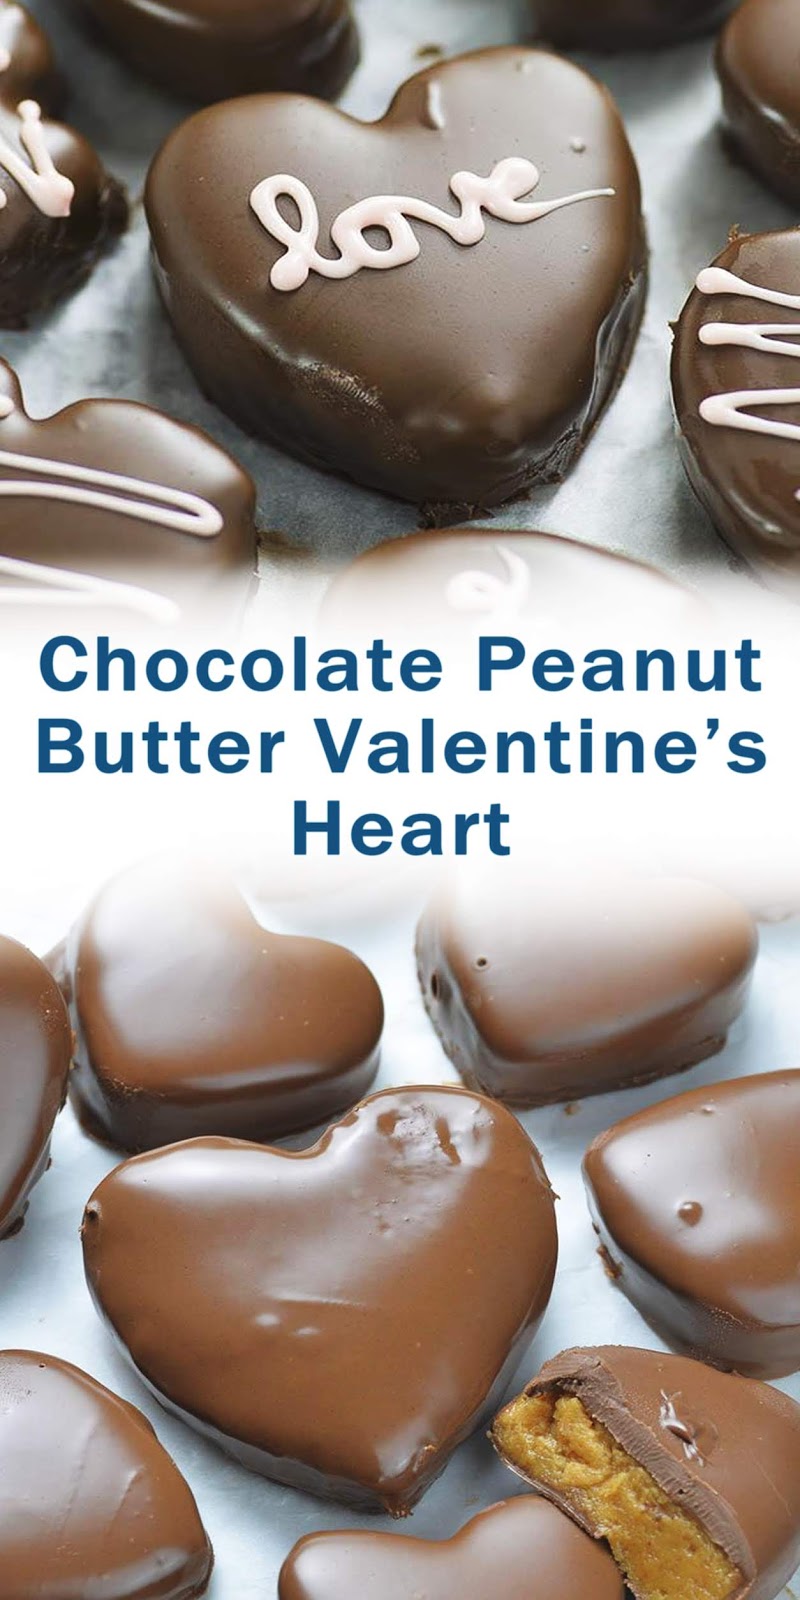 Chocolate Peanut Butter Valentine’s Heart